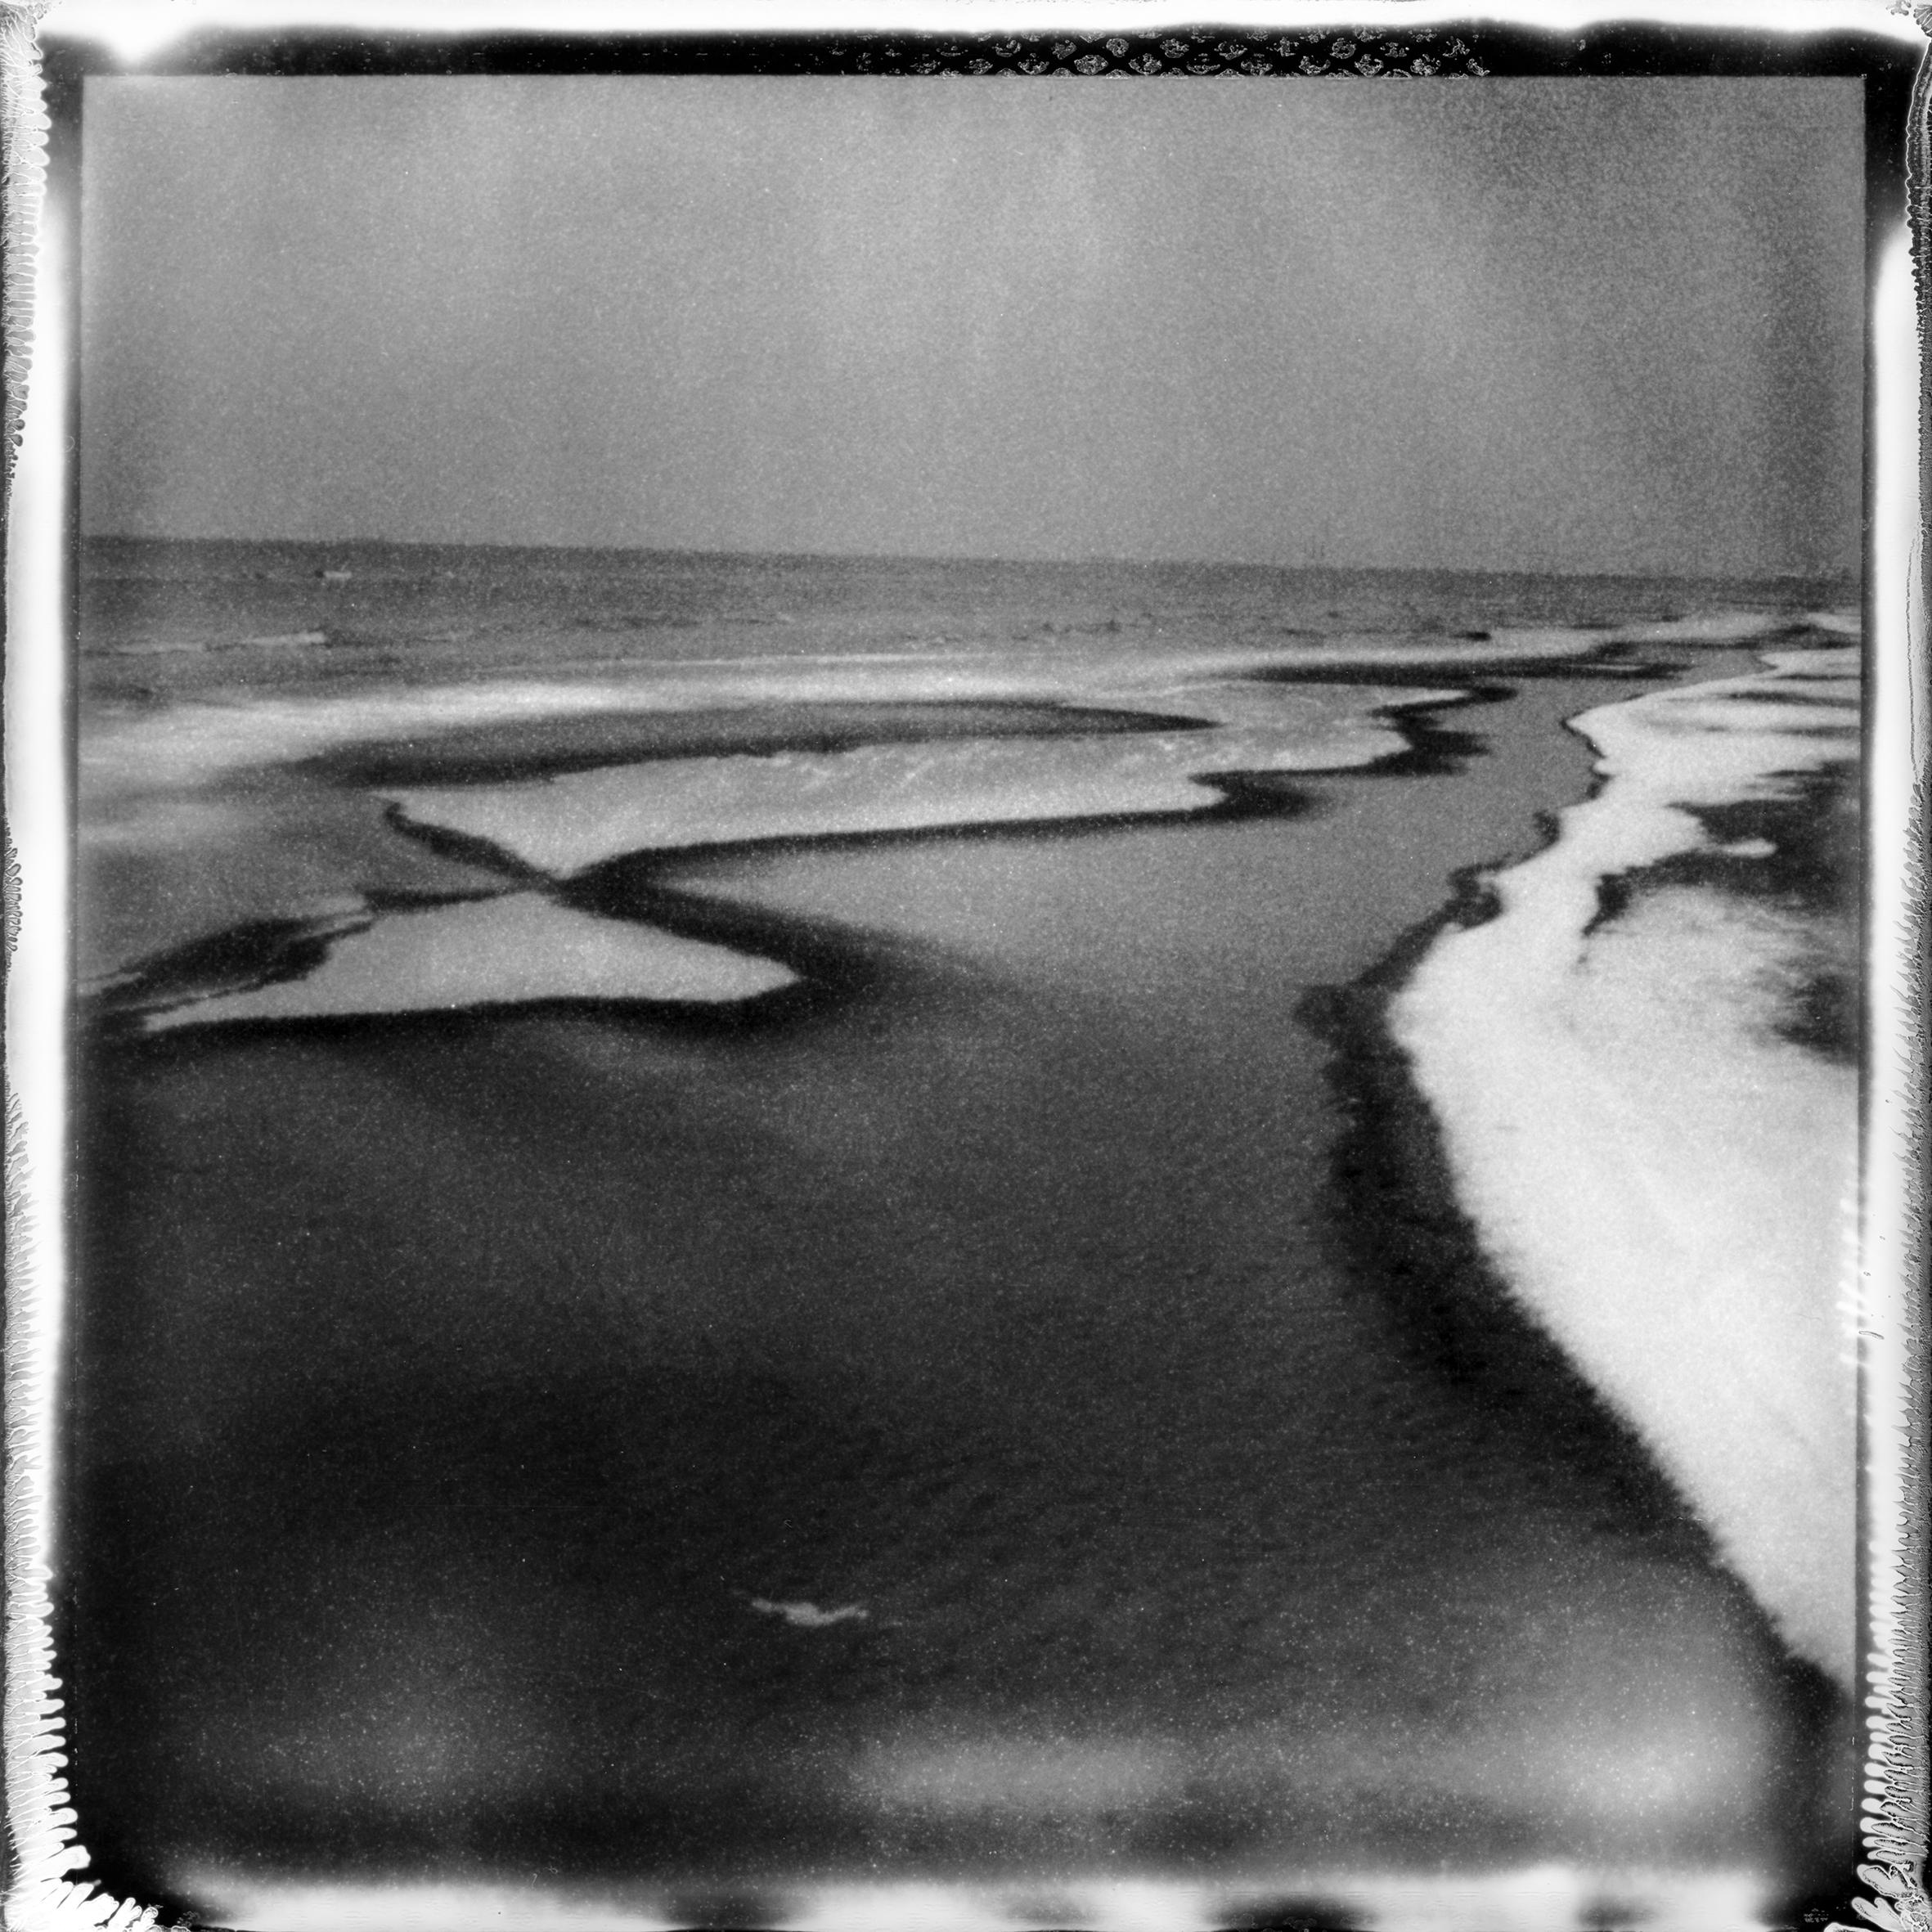 Ugne Pouwell Landscape Photograph - 'Frozen beach #3' - black and white analogue landscape photography